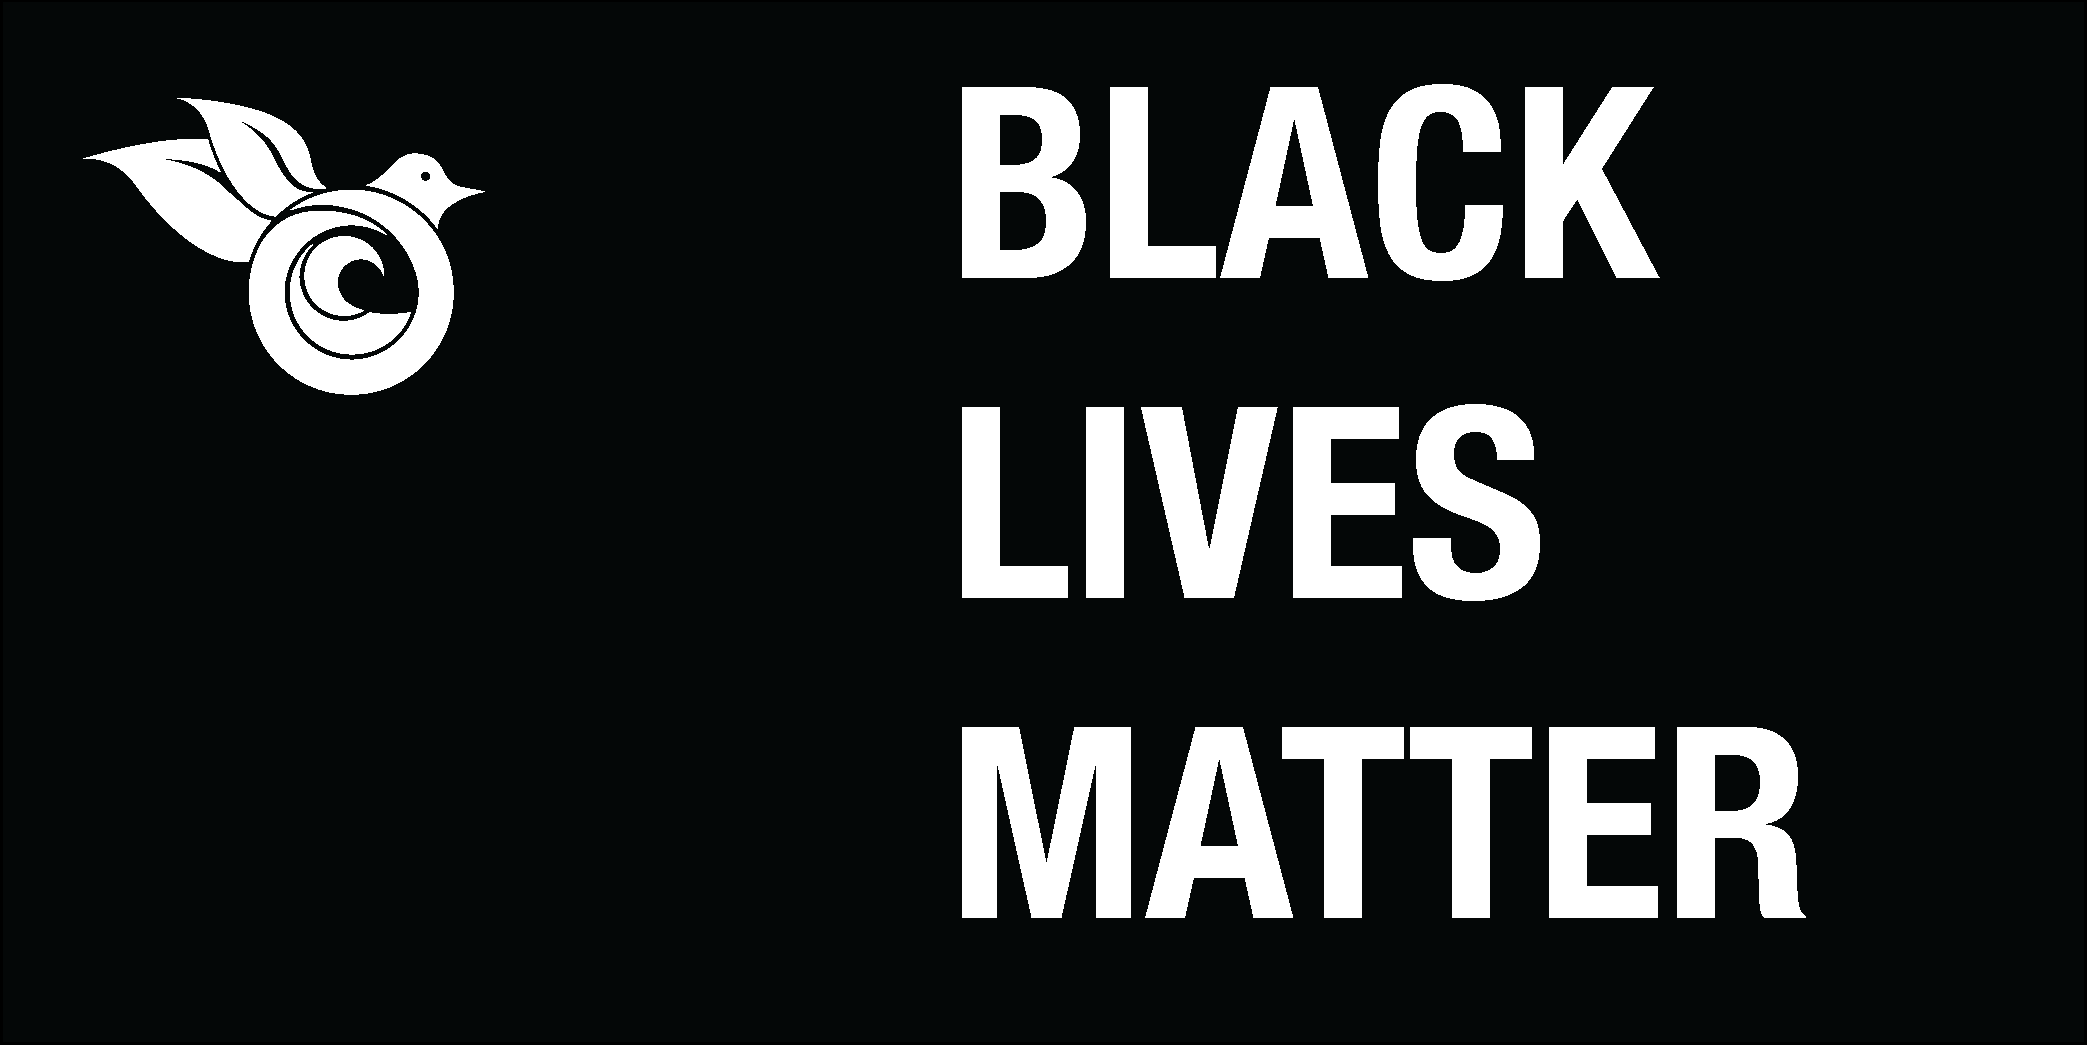 Our support for Black Lives Matter